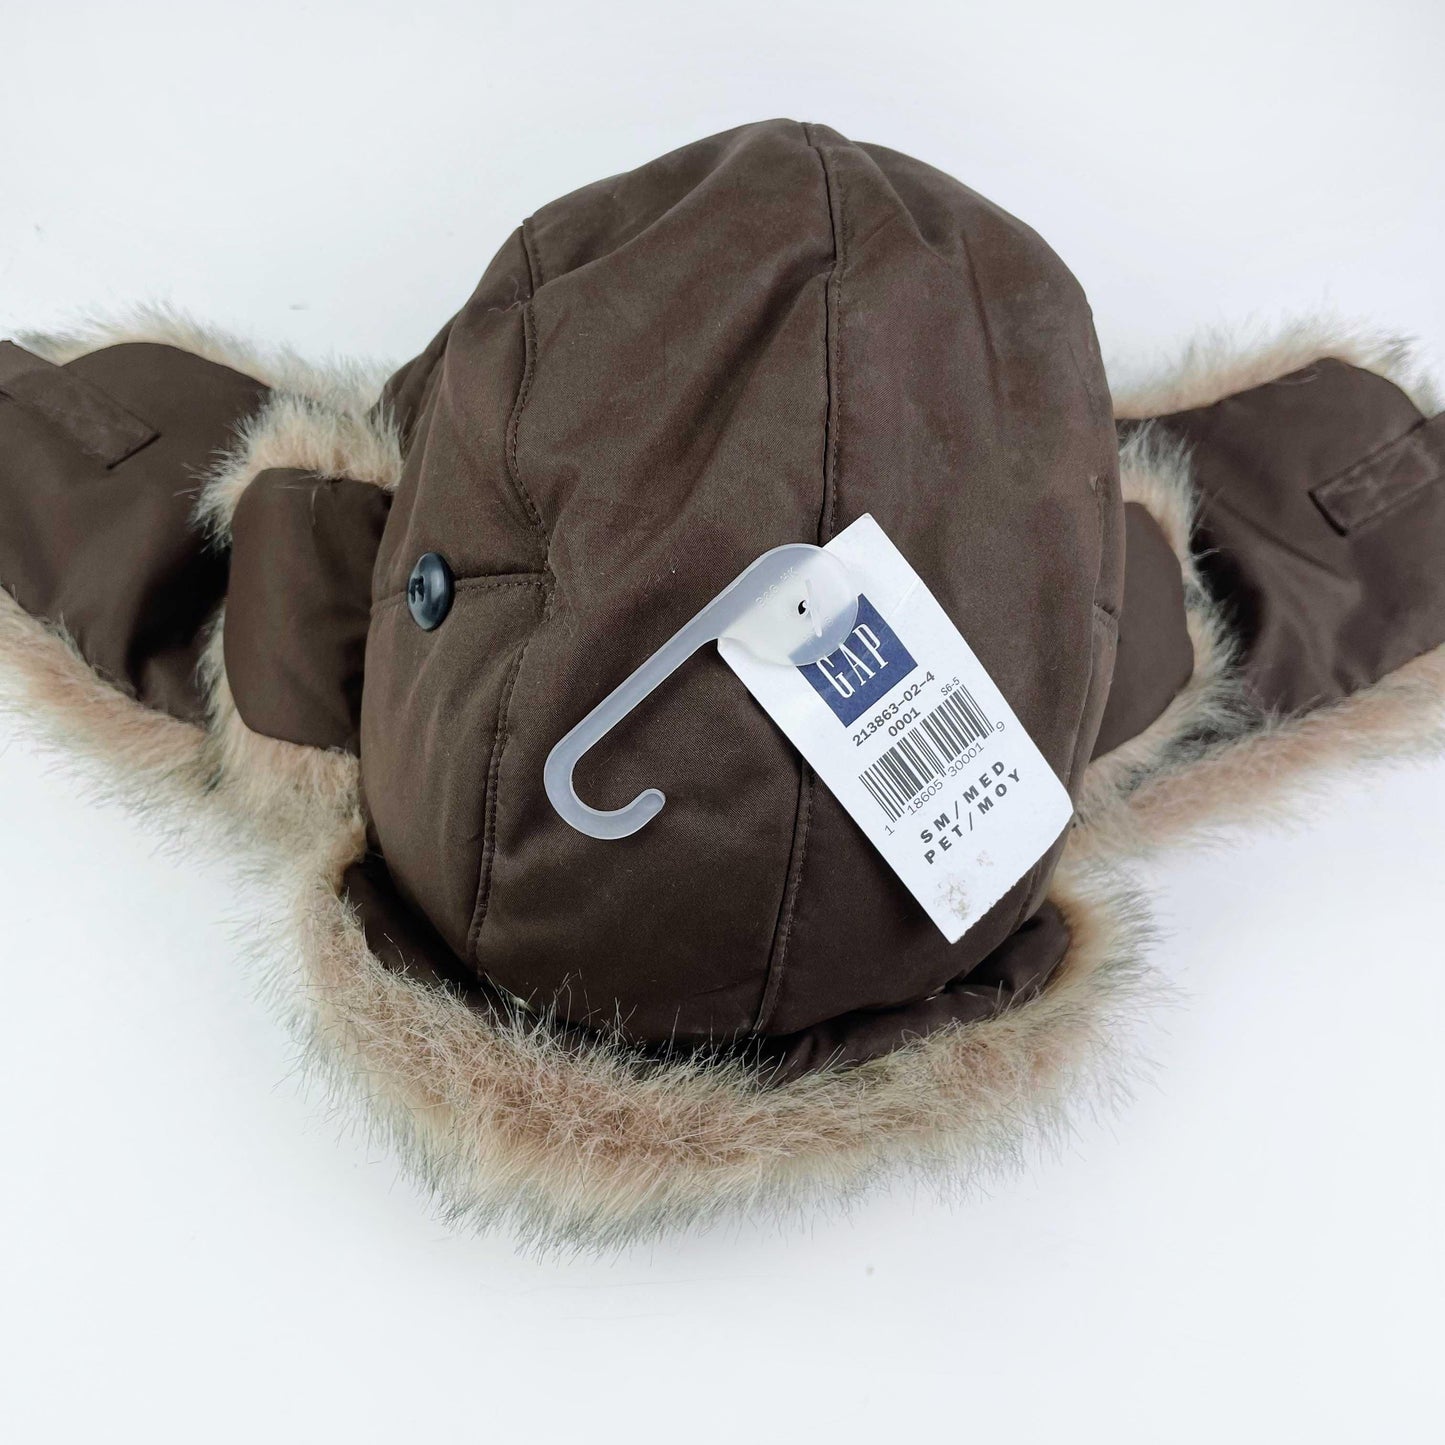 nwt gap kids faux fur lined trapper hat - size sm/med